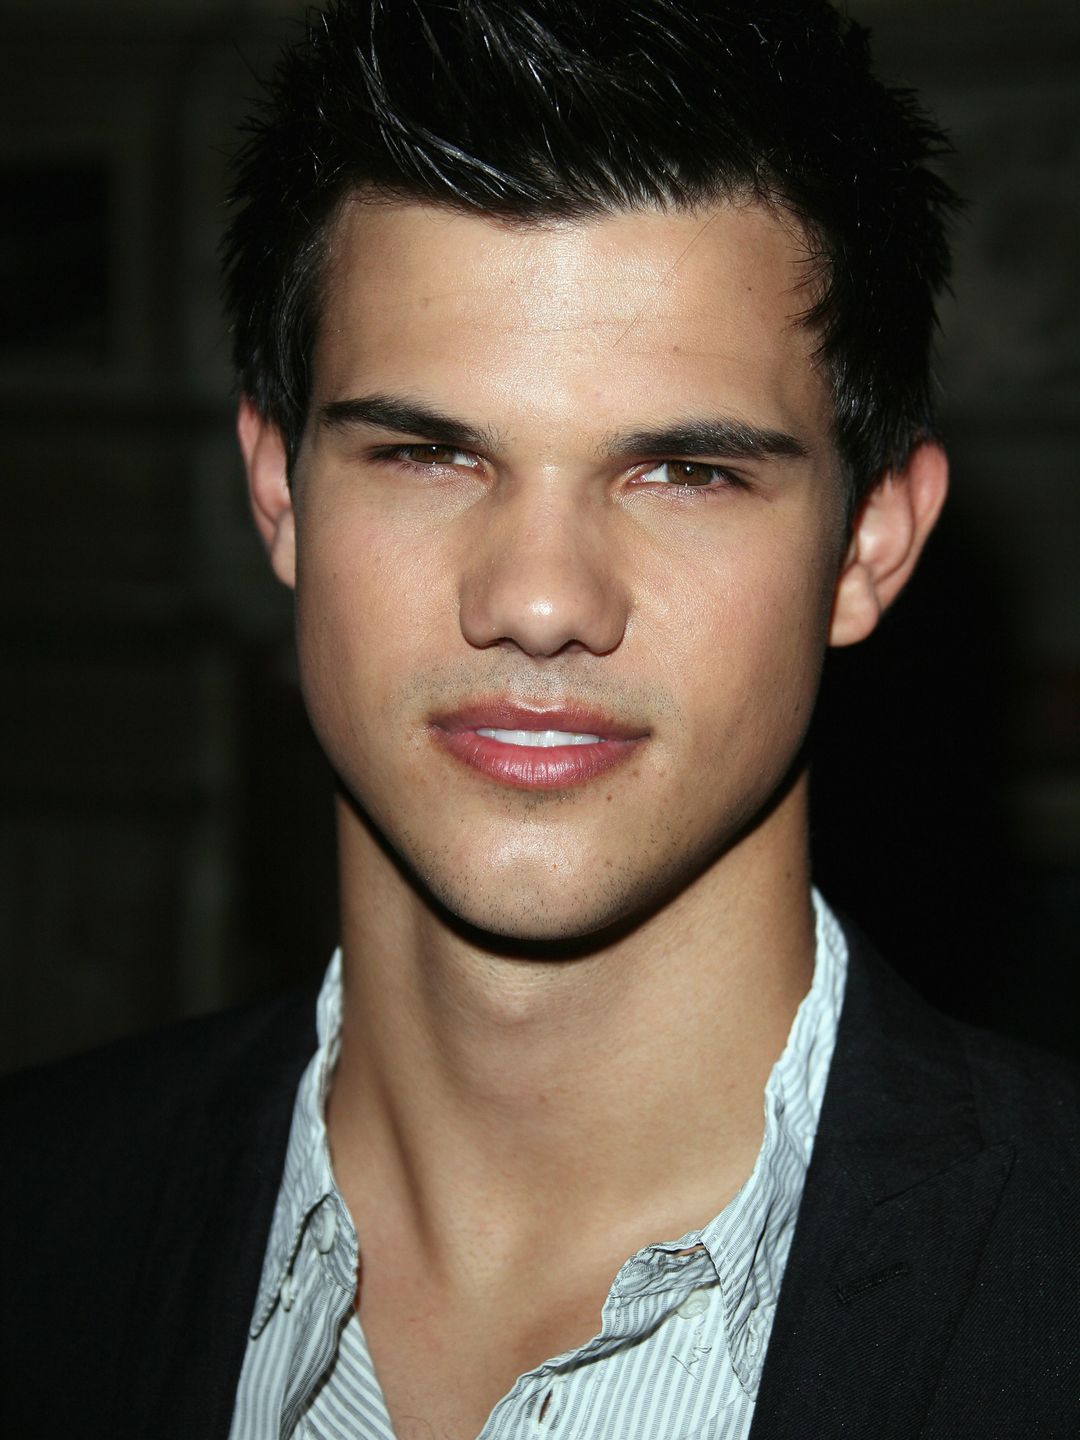 Taylor Lautner young pics